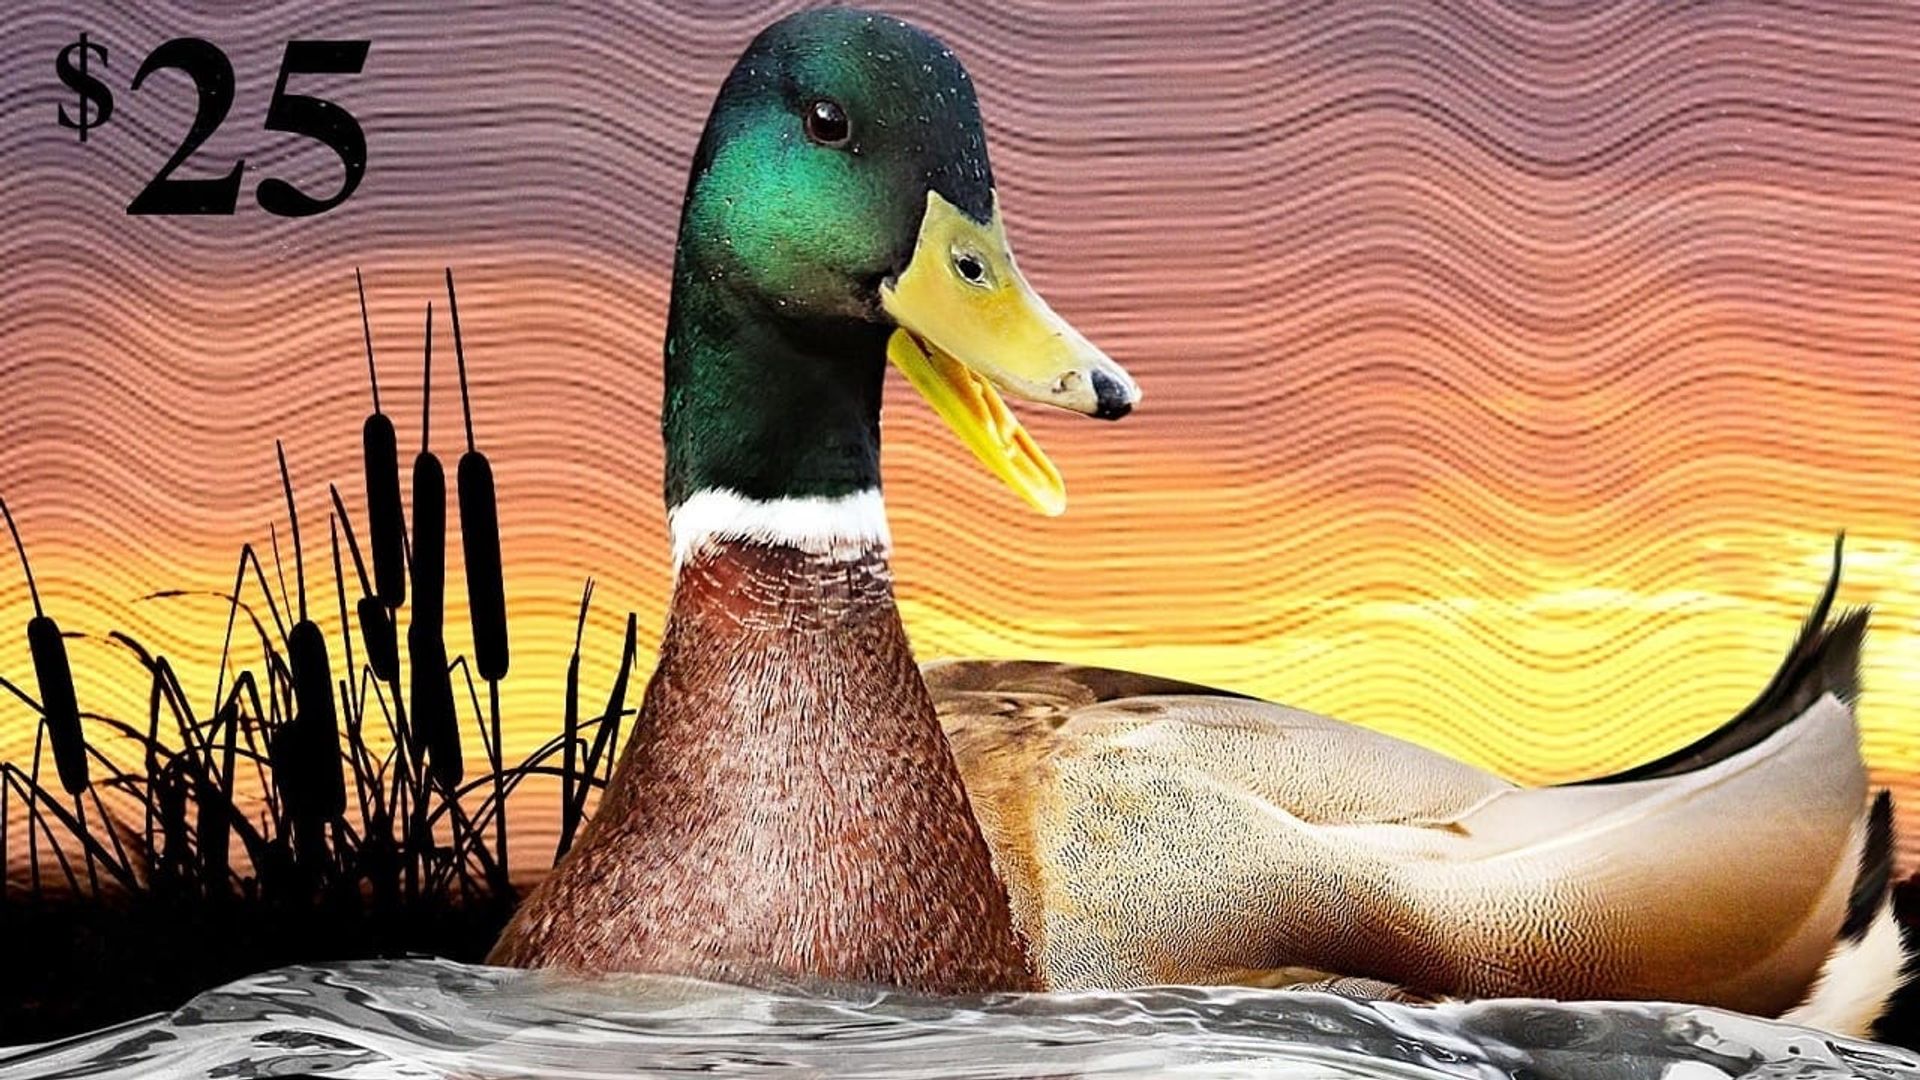 The Million Dollar Duck background